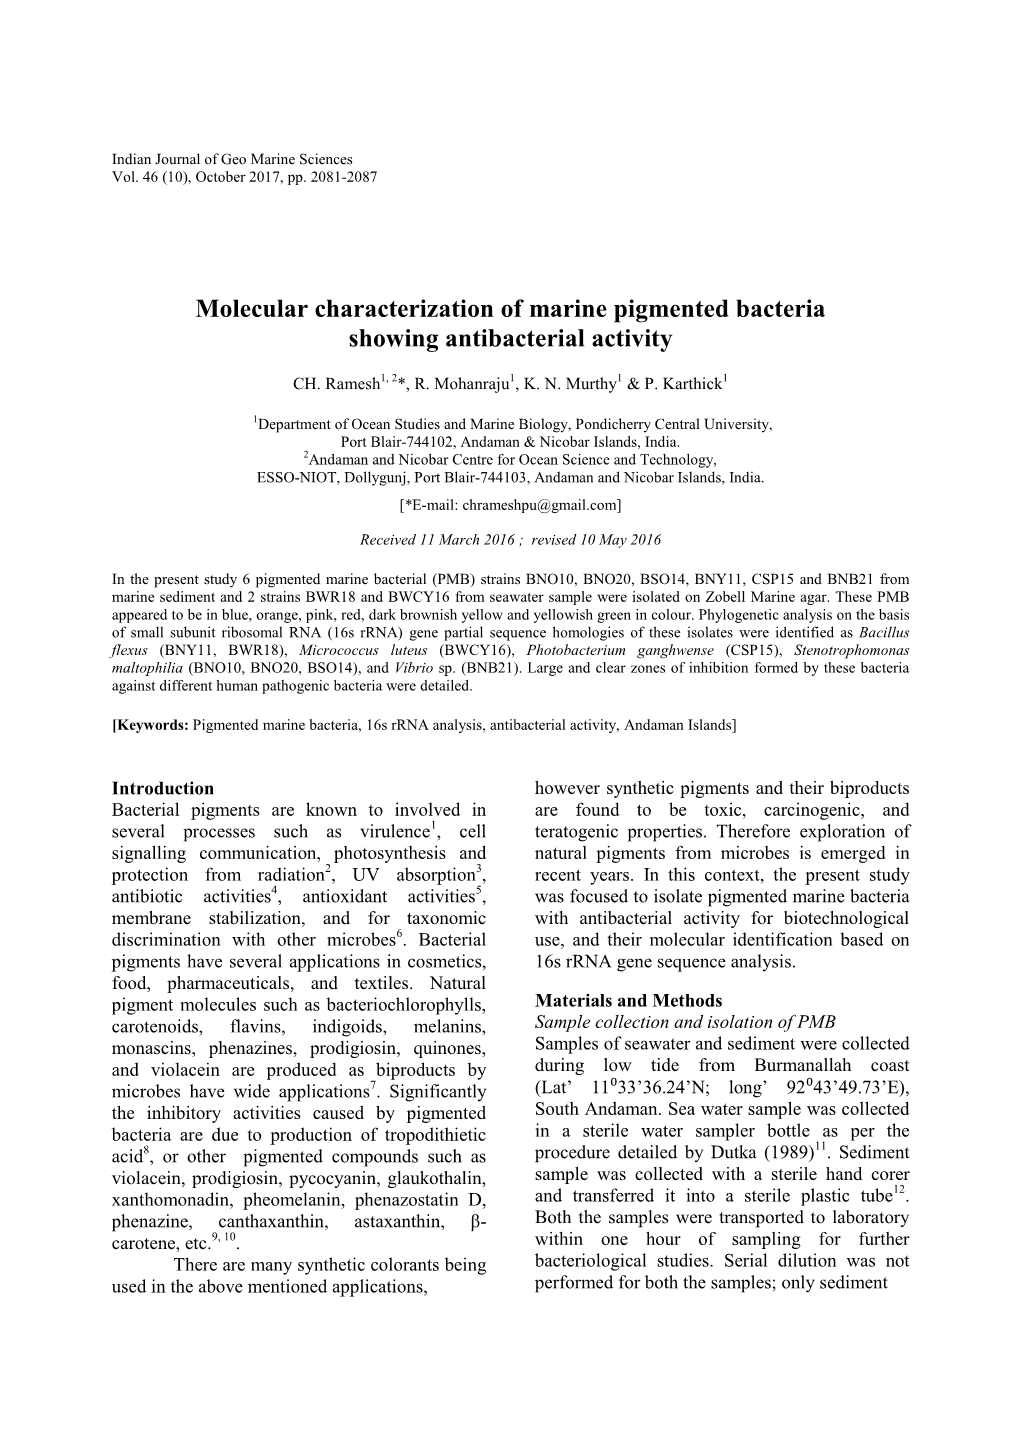 Molecular Characterization of Marine Pigmented Bacteria Showing Antibacterial Activity